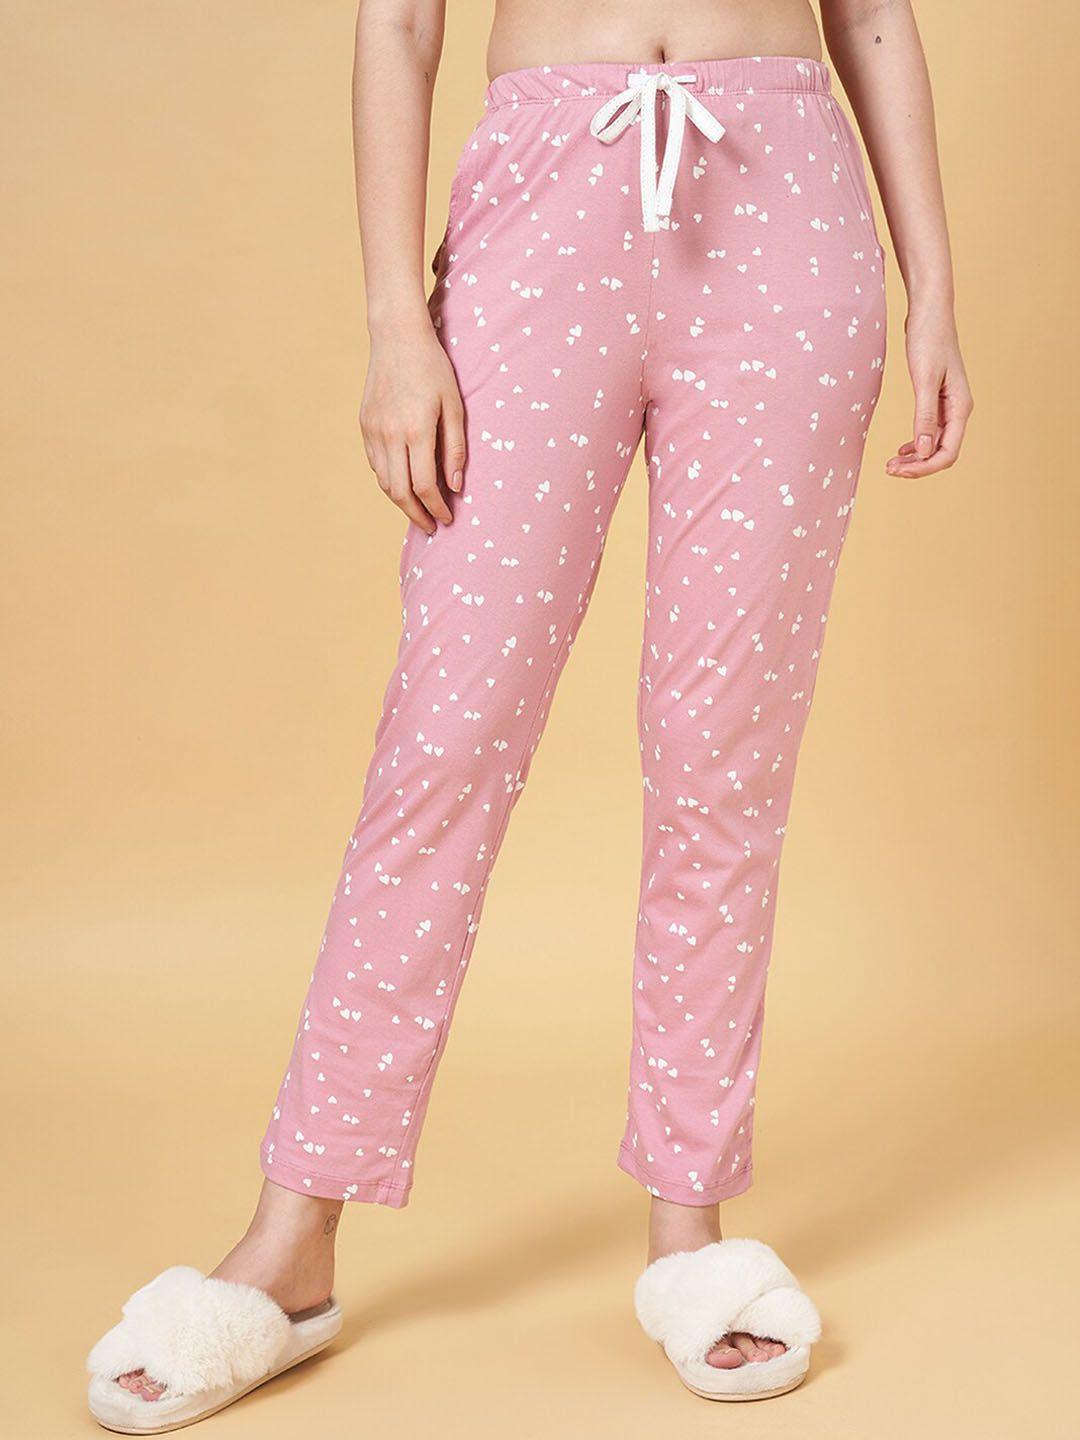 dreamz by pantaloons  women conversational printed mid-rise cotton lounge pant